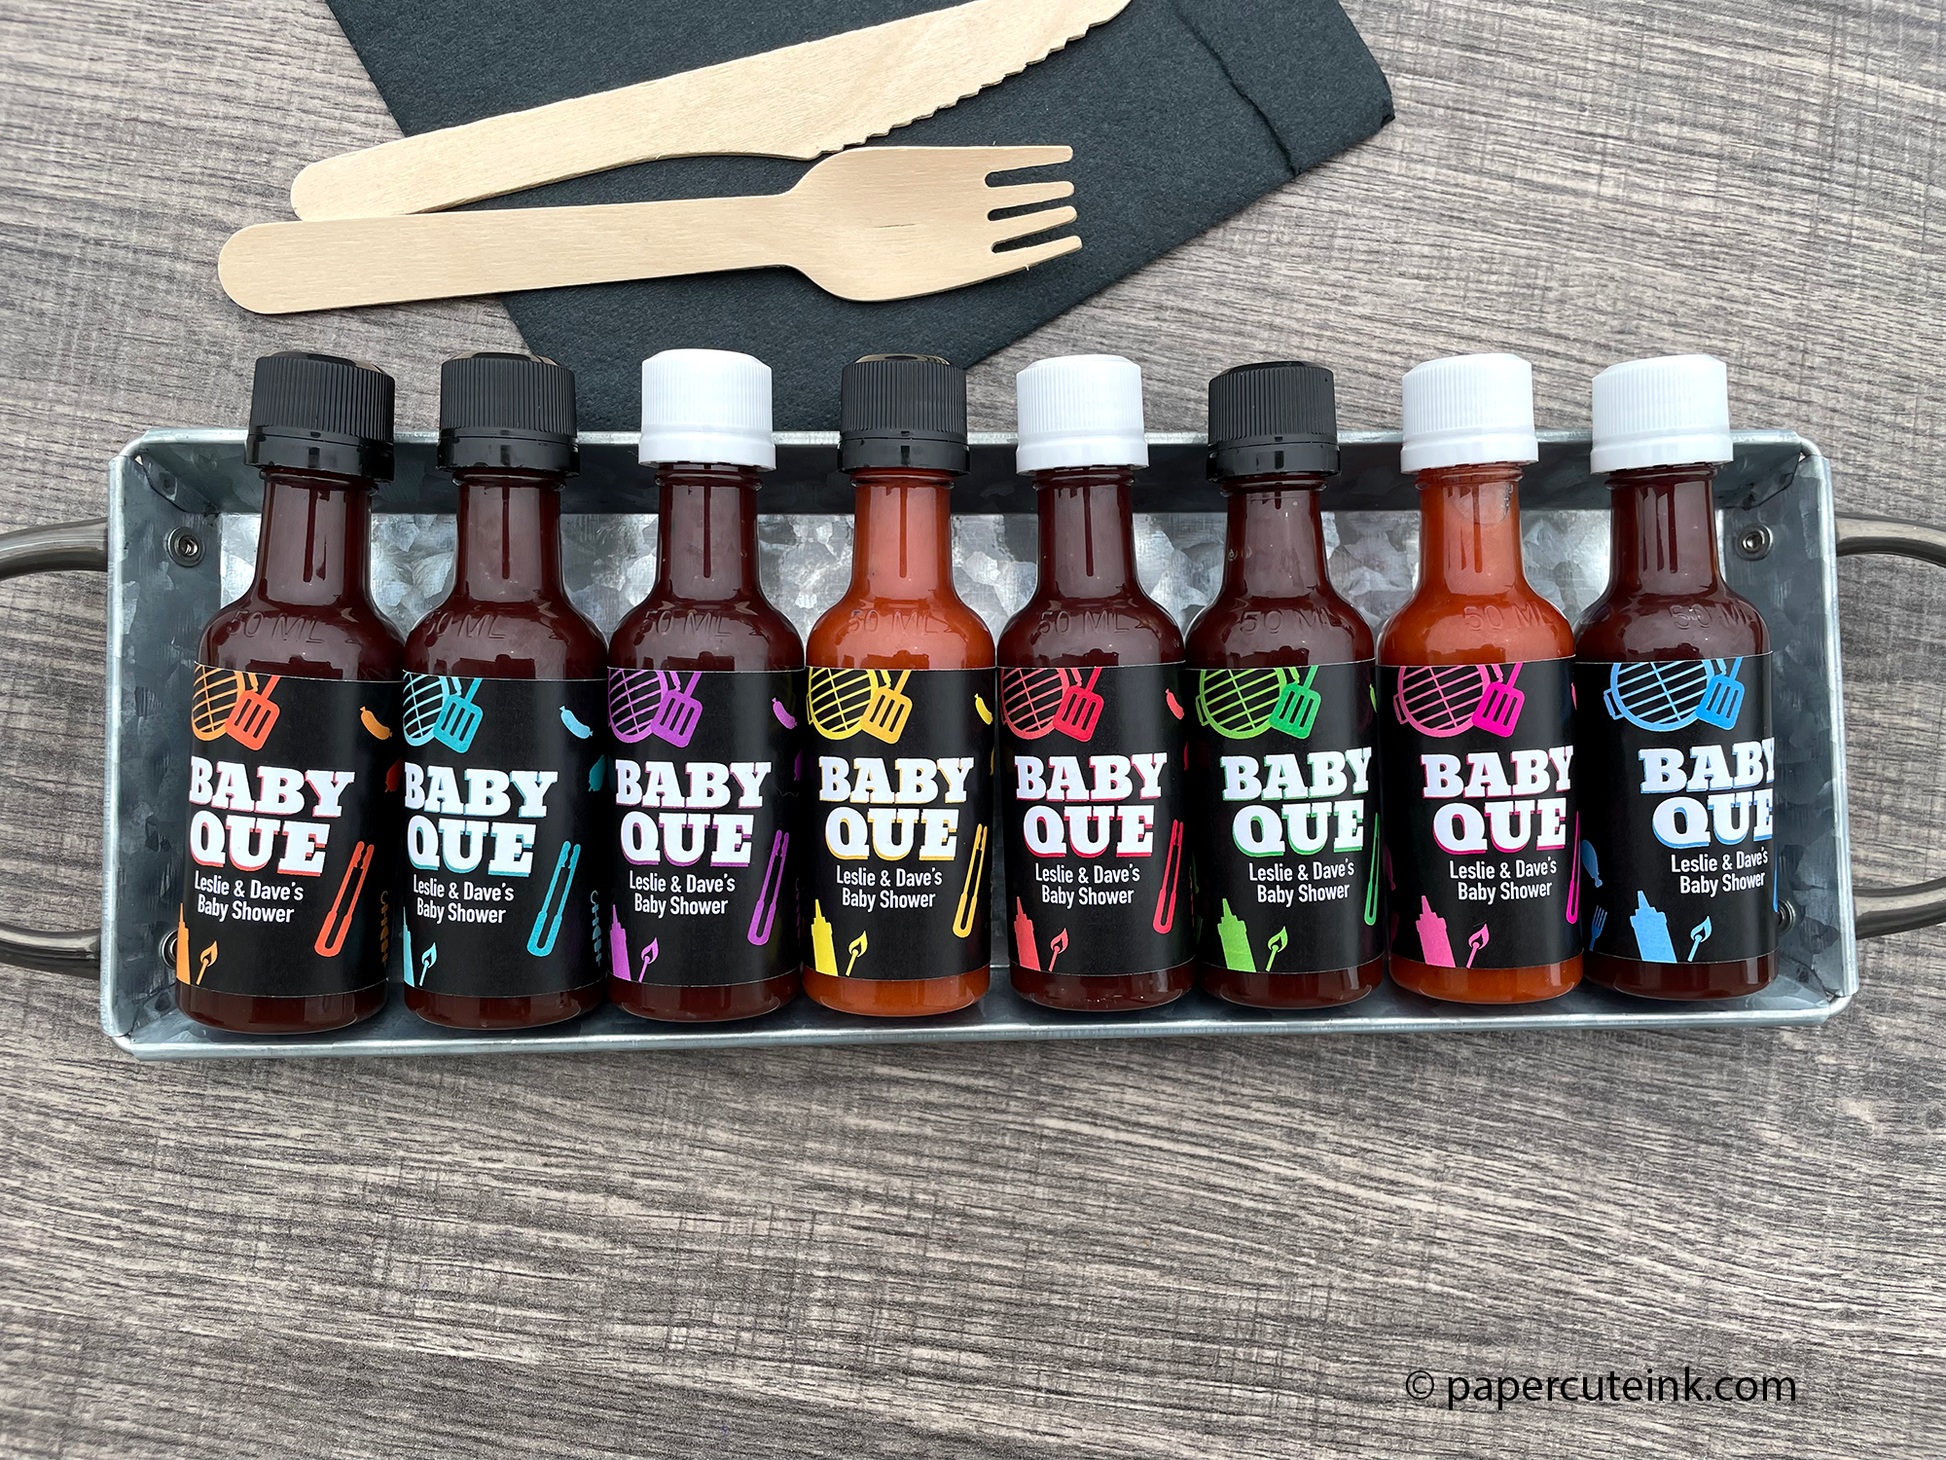 babyq baby shower favors mini bbq sauce bottles on a picnic table